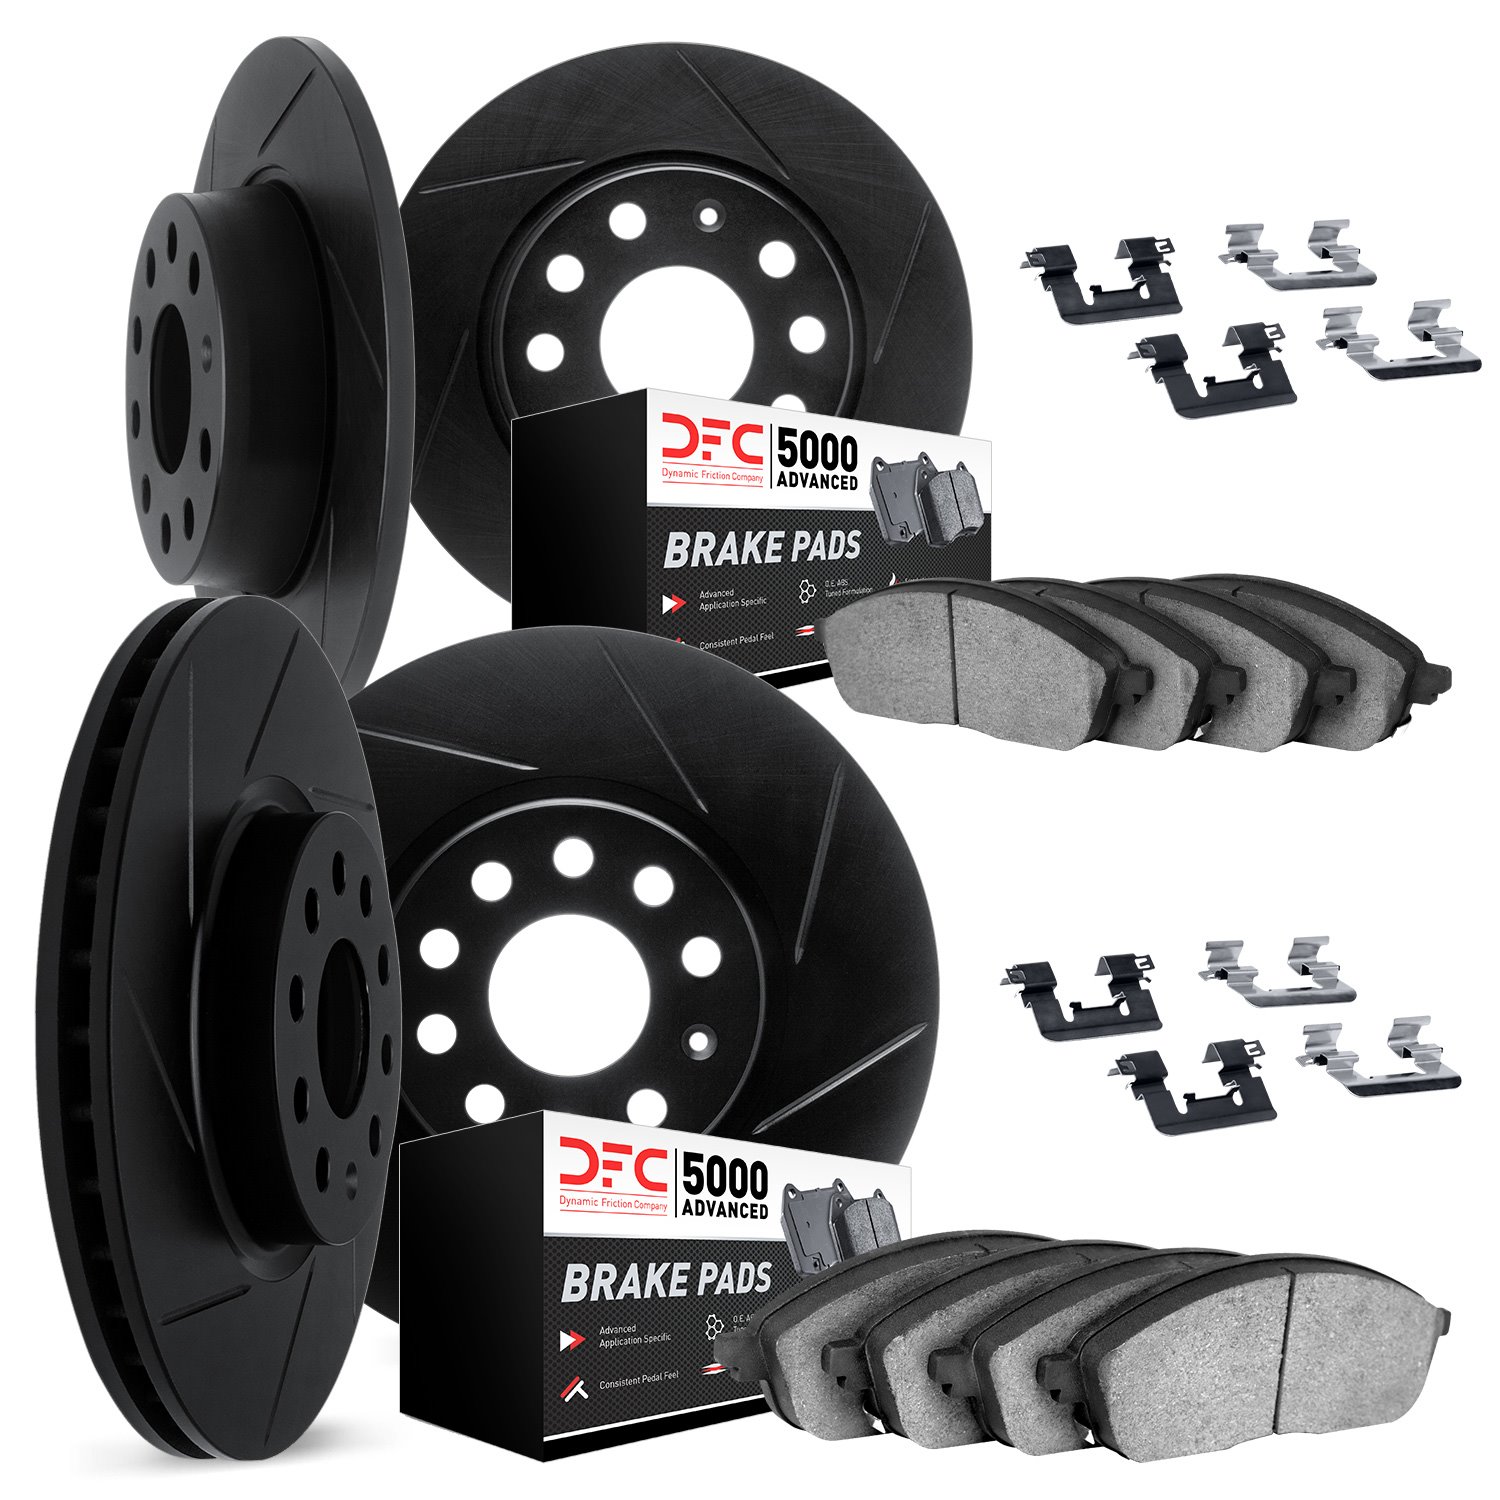 3514-54116 Slotted Brake Rotors w/5000 Advanced Brake Pads Kit & Hardware [Black], 2015-2019 Ford/Lincoln/Mercury/Mazda, Positio